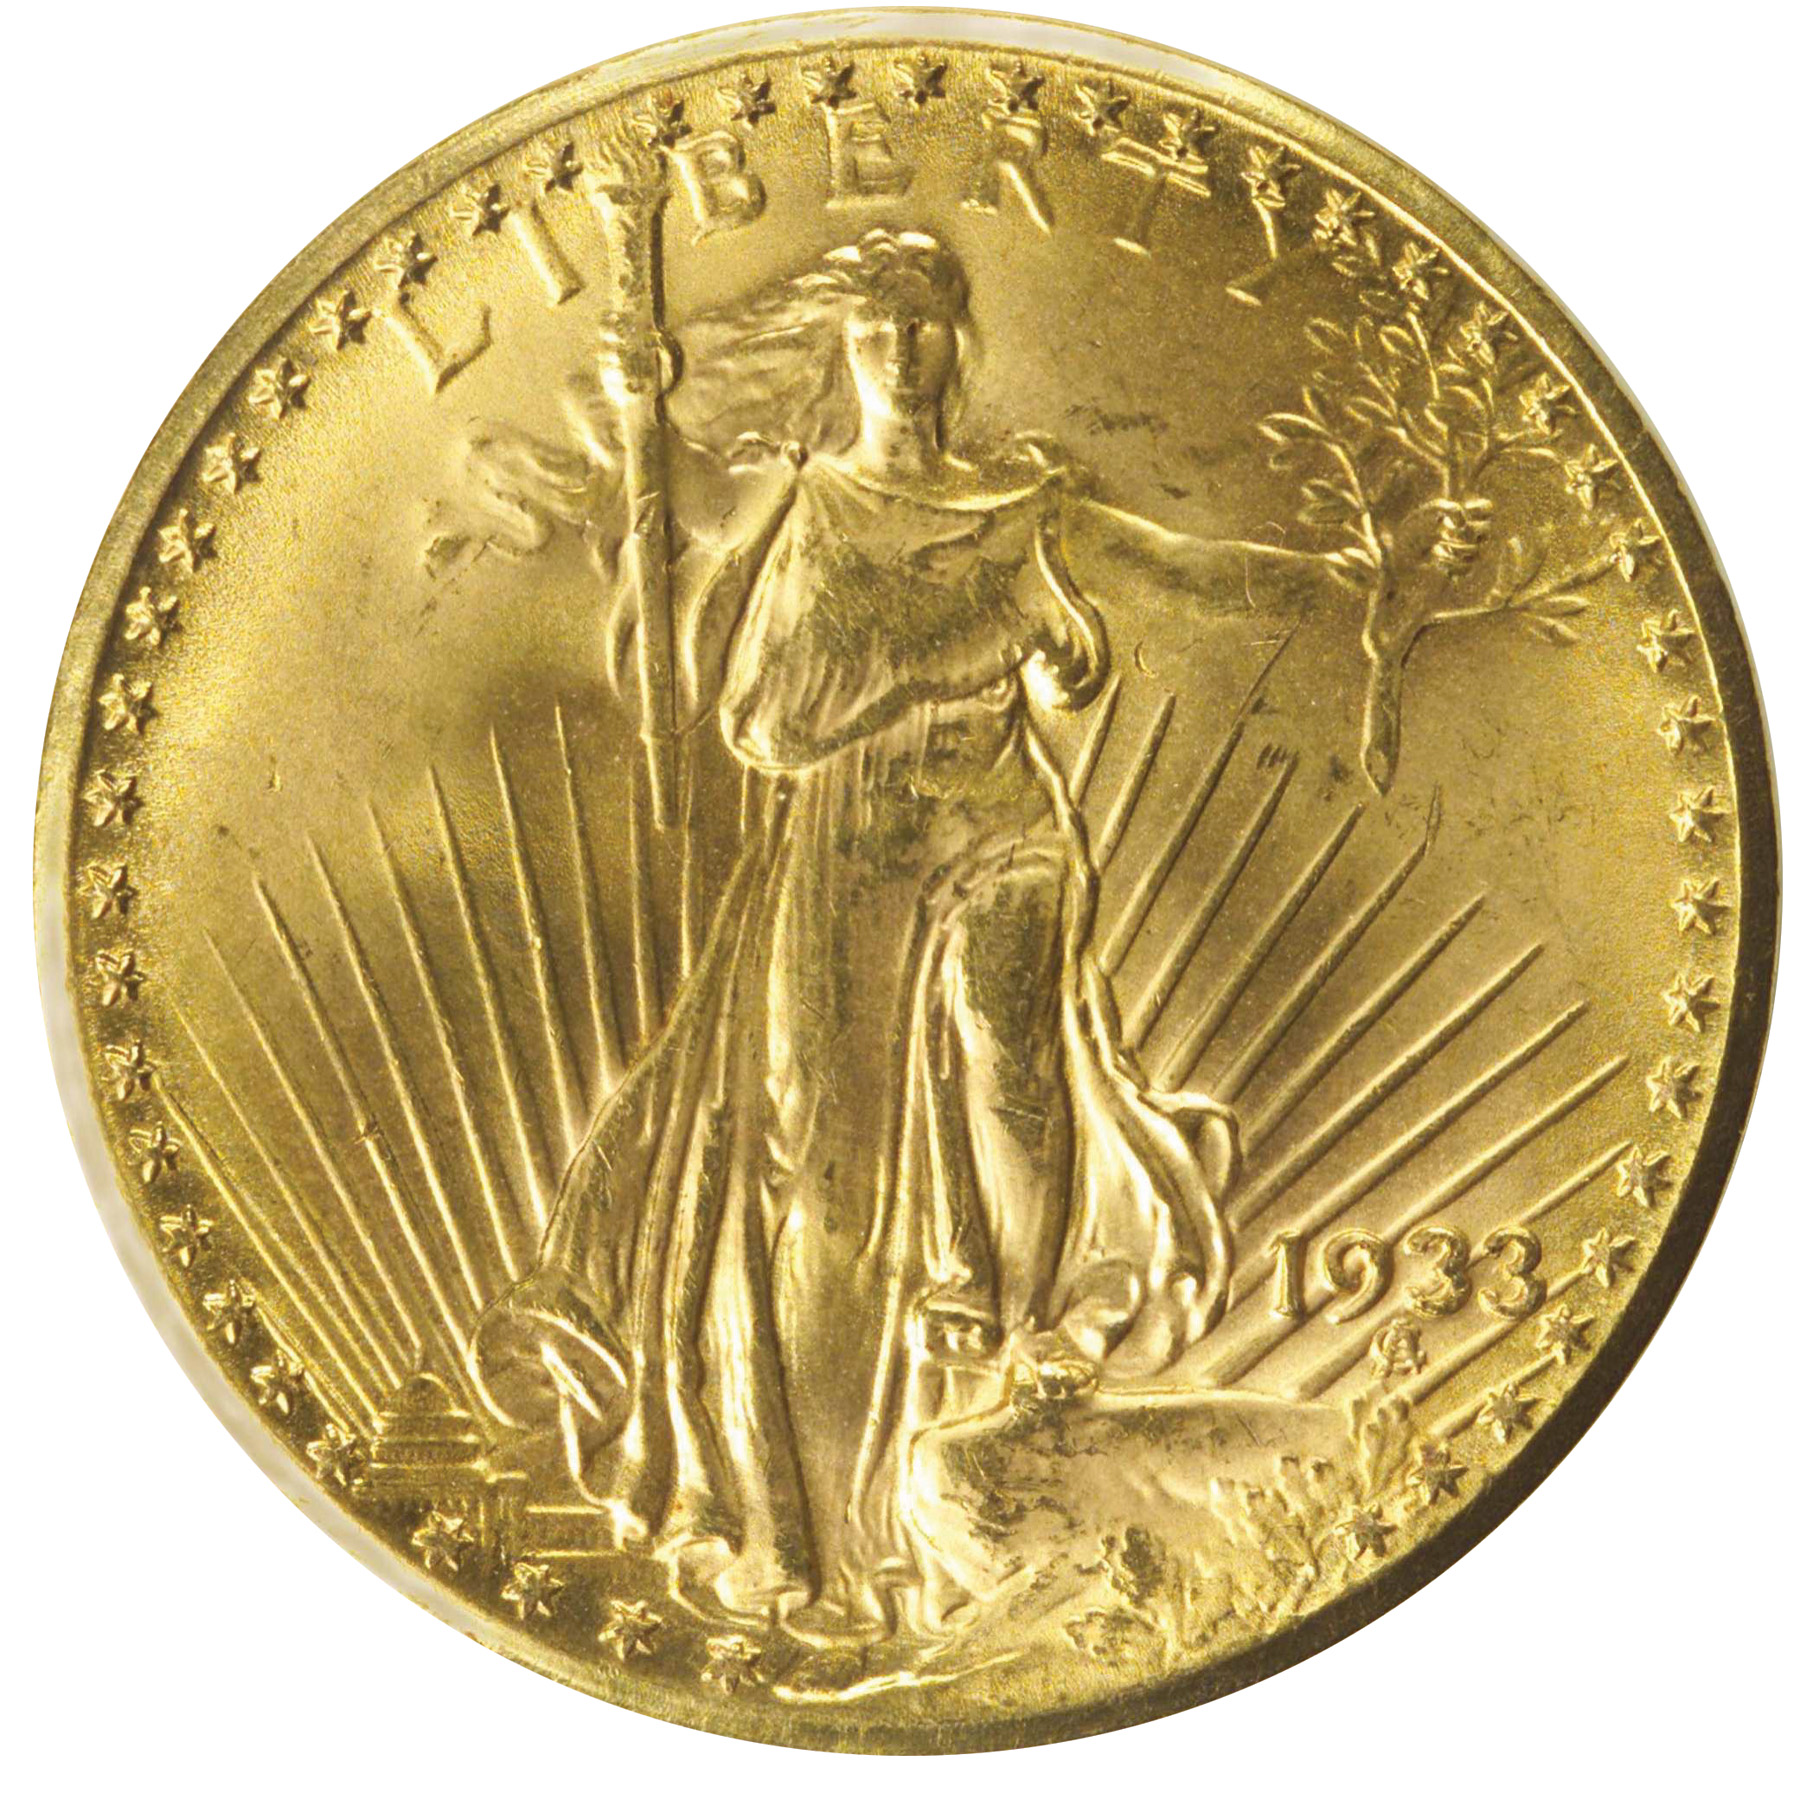 AHS Fantasy Coin 1933 $20 Gold Clad Proof Ltd.Ed 